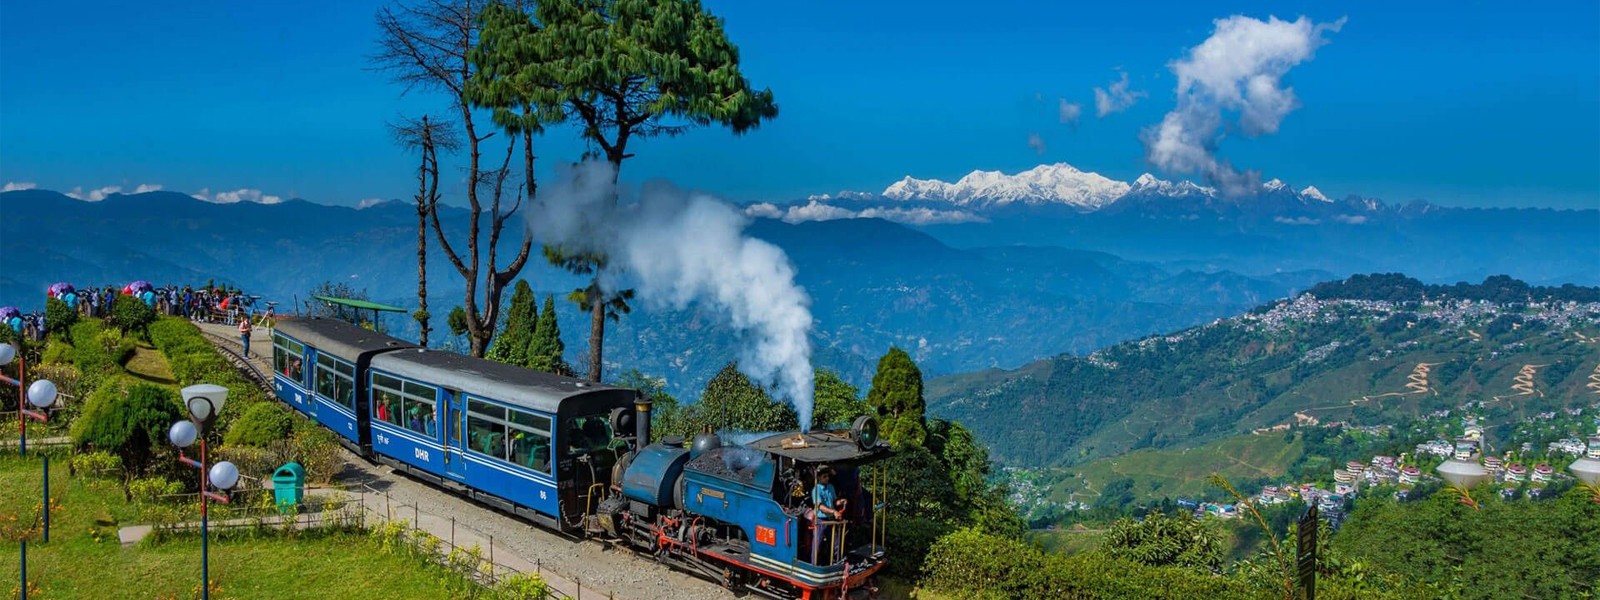 Trekking Around Darjeeling, India